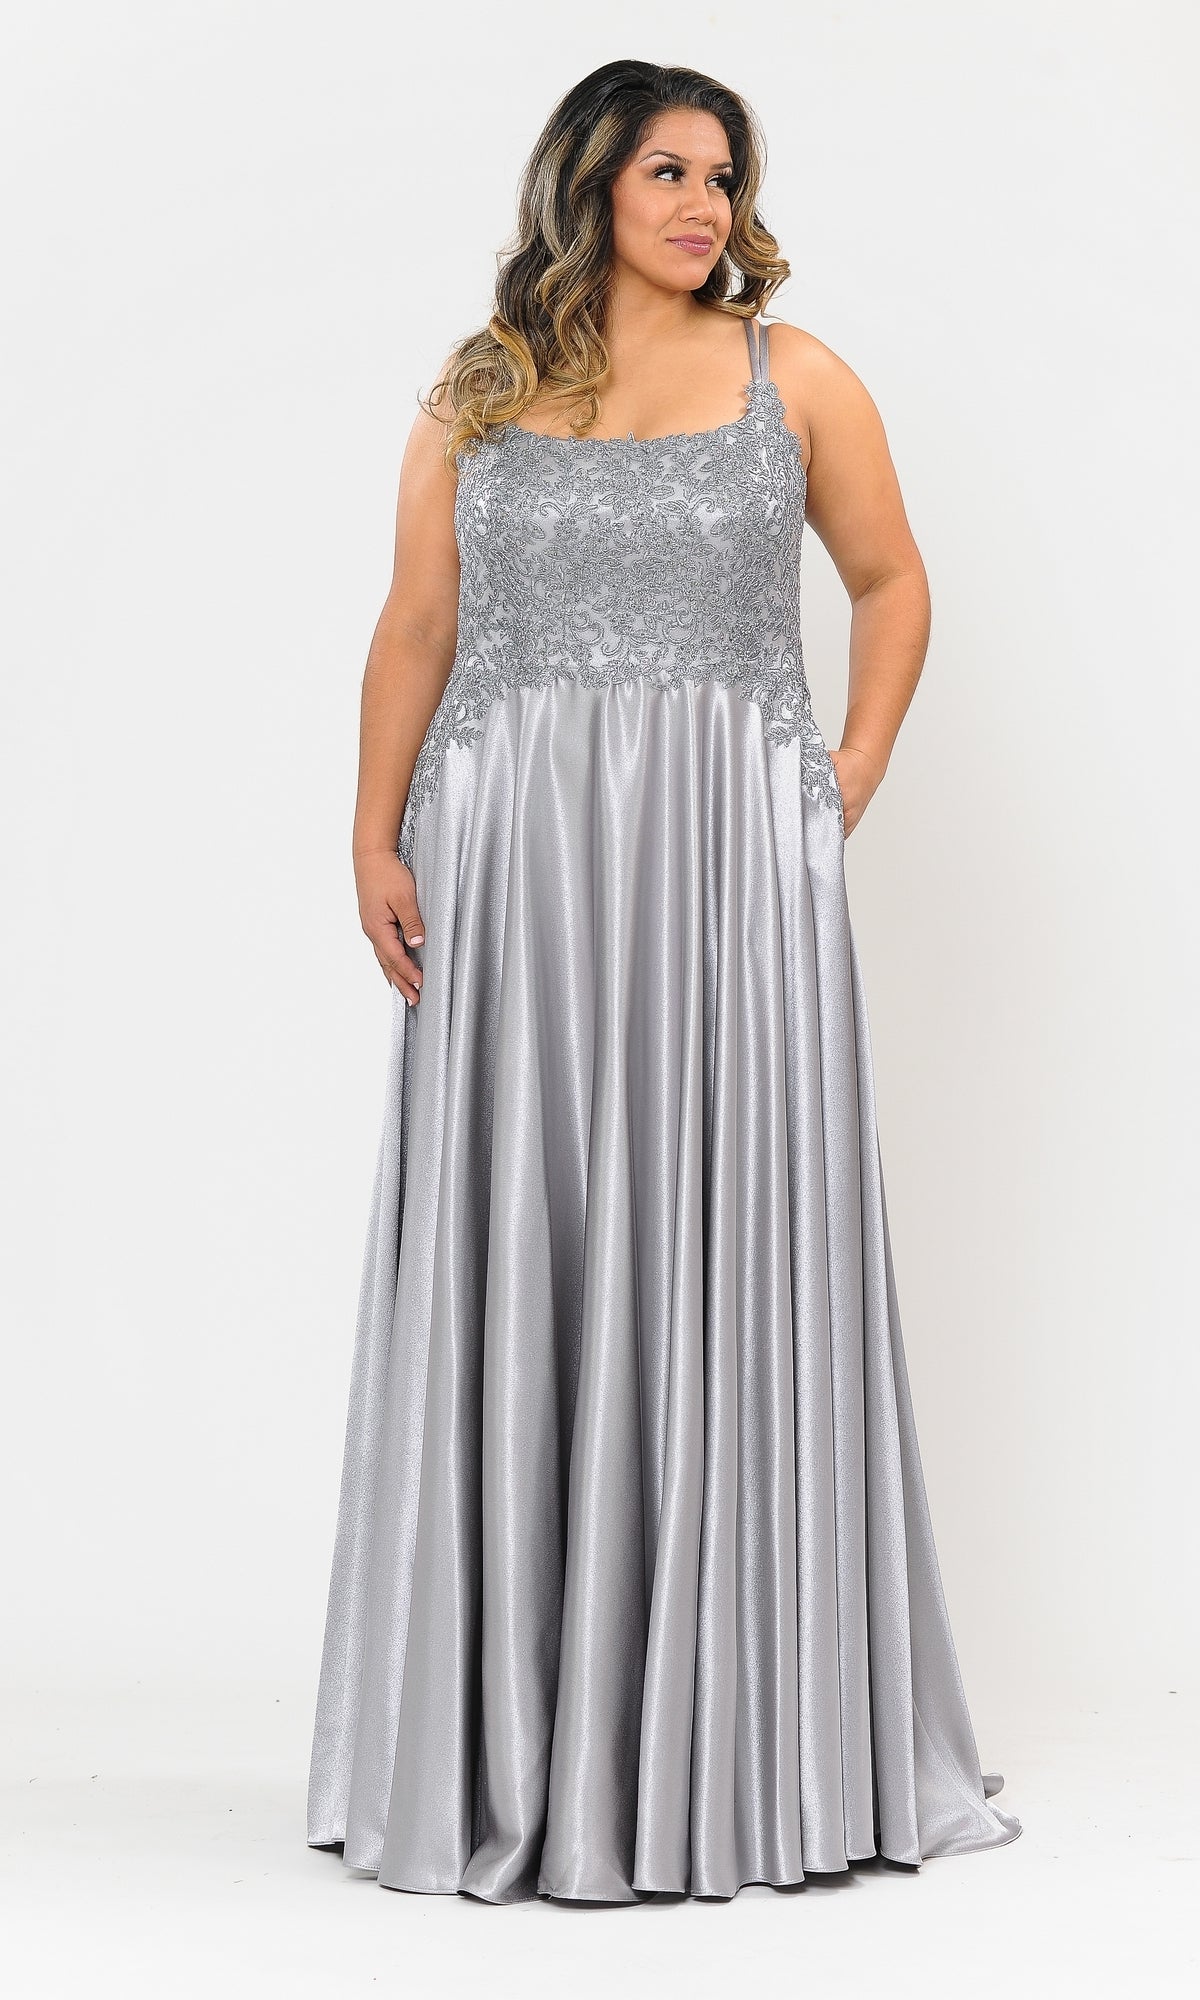 Lace-Bodice Plus-Size Long A-Line Prom Dress W1094